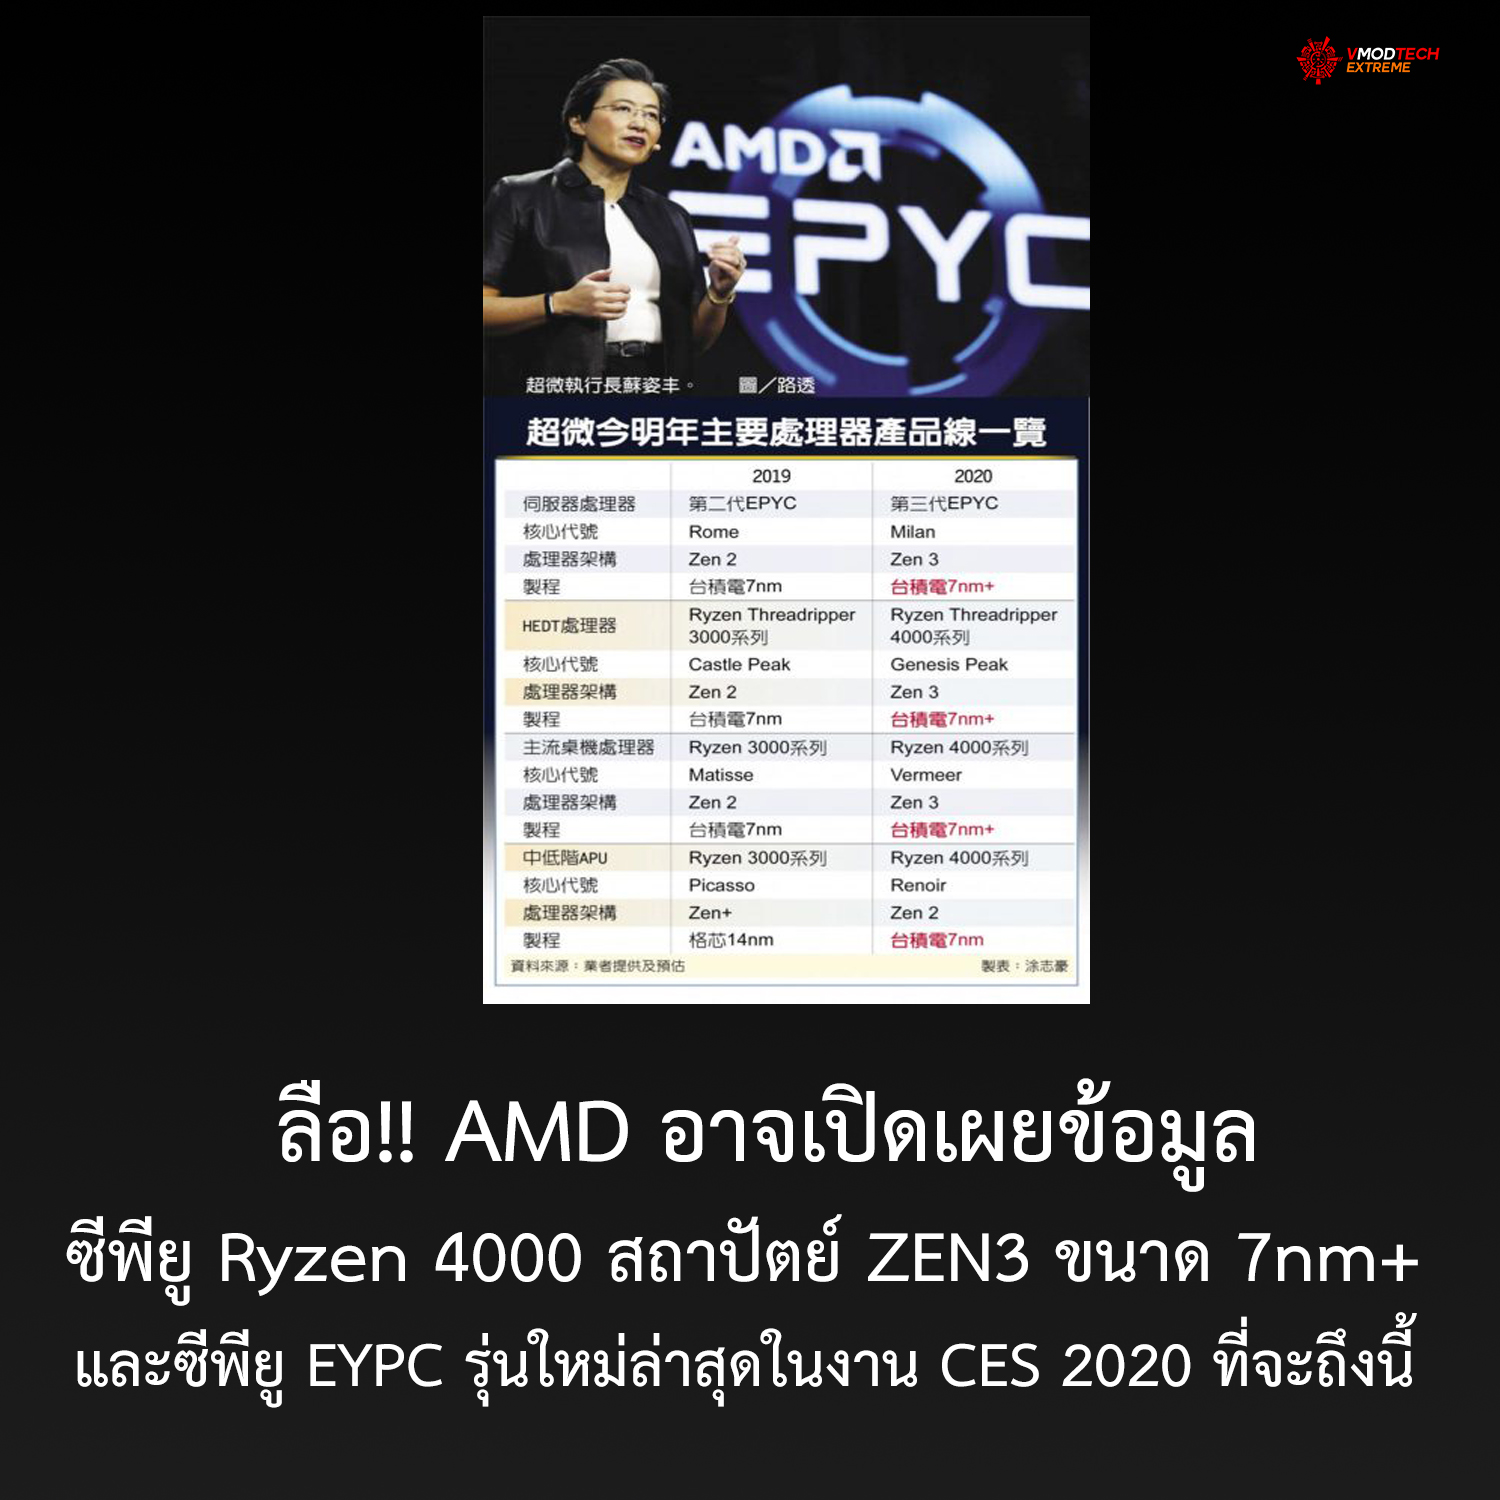 ryzen40001 ลือ!! AMD อาจเผยข้อมูลซีพียู Ryzen 4000 สถาปัตย์ ZEN3 และซีพียู EYPC รุ่นใหม่ล่าสุดในงาน CES 2020 ที่จะถึงนี้ 